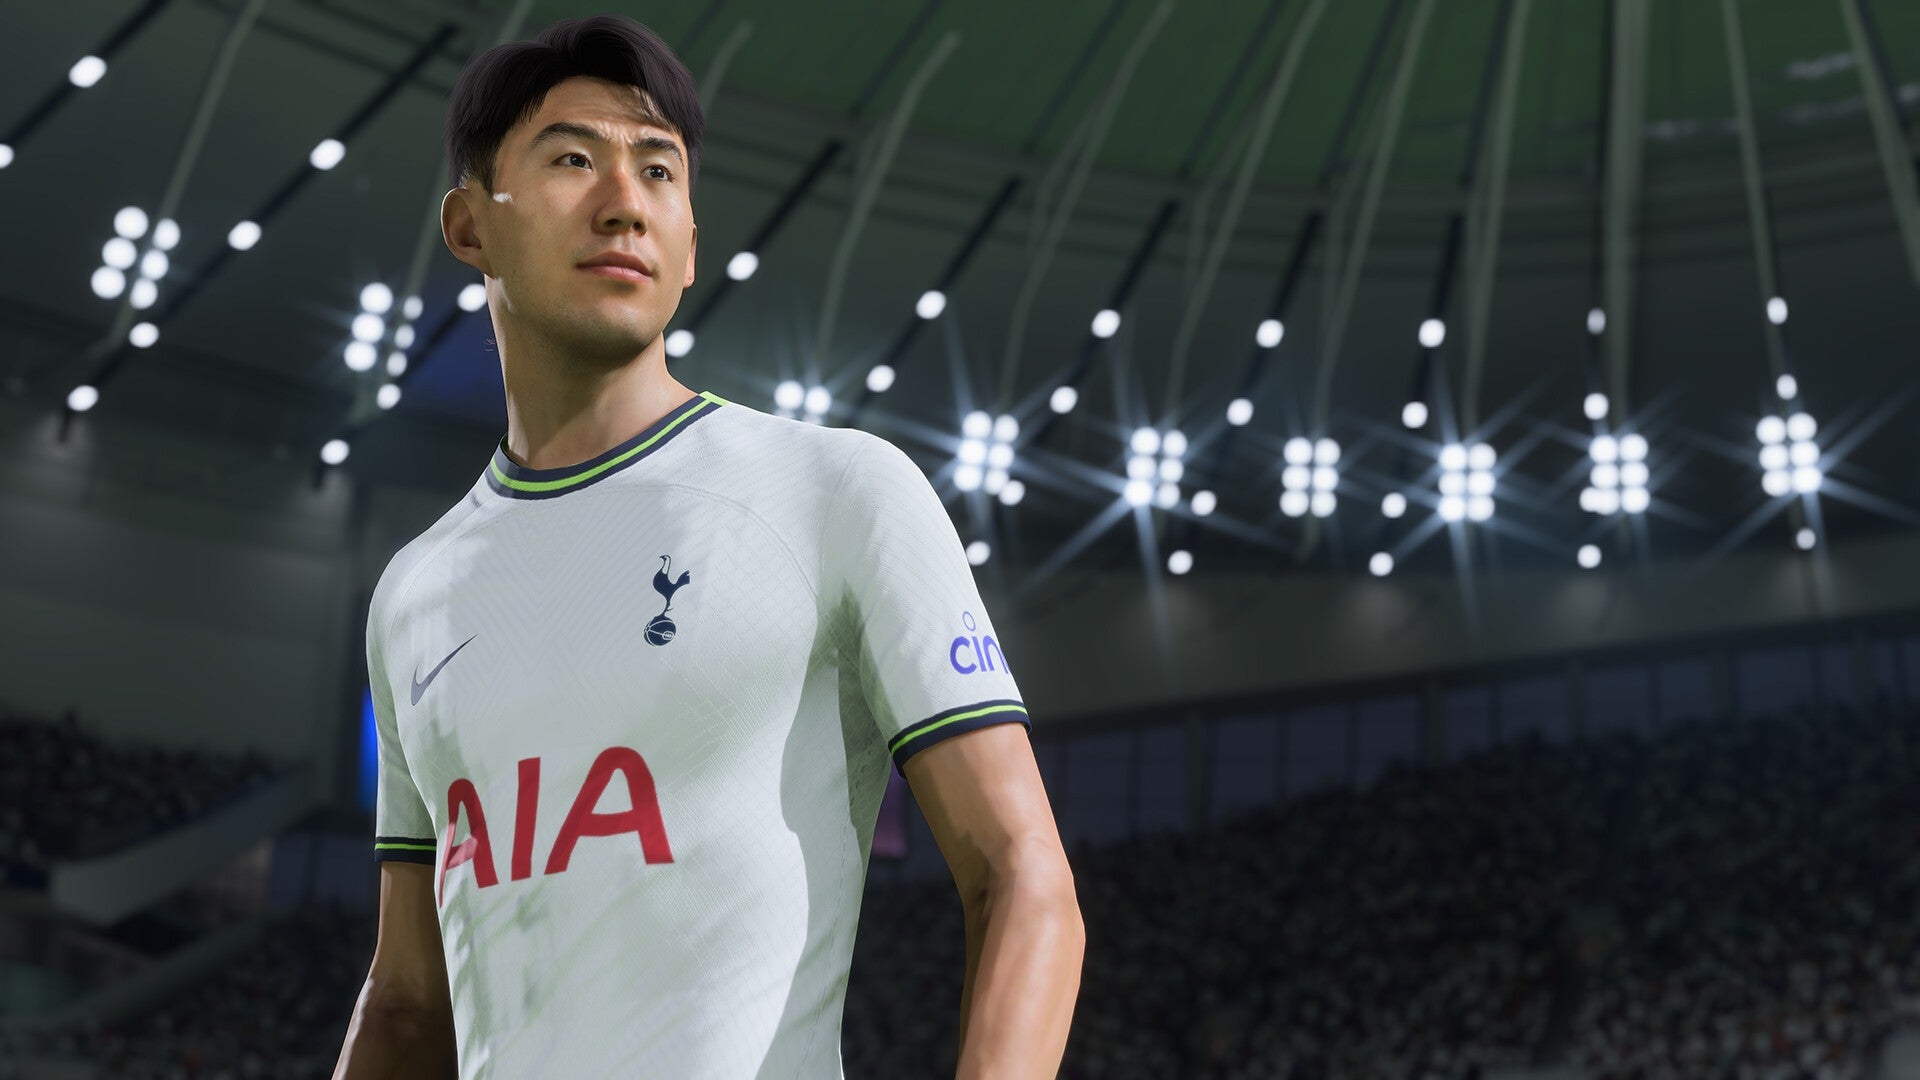 FIFA 23 image showing Son wearing his Tottenham Hotspur kit.